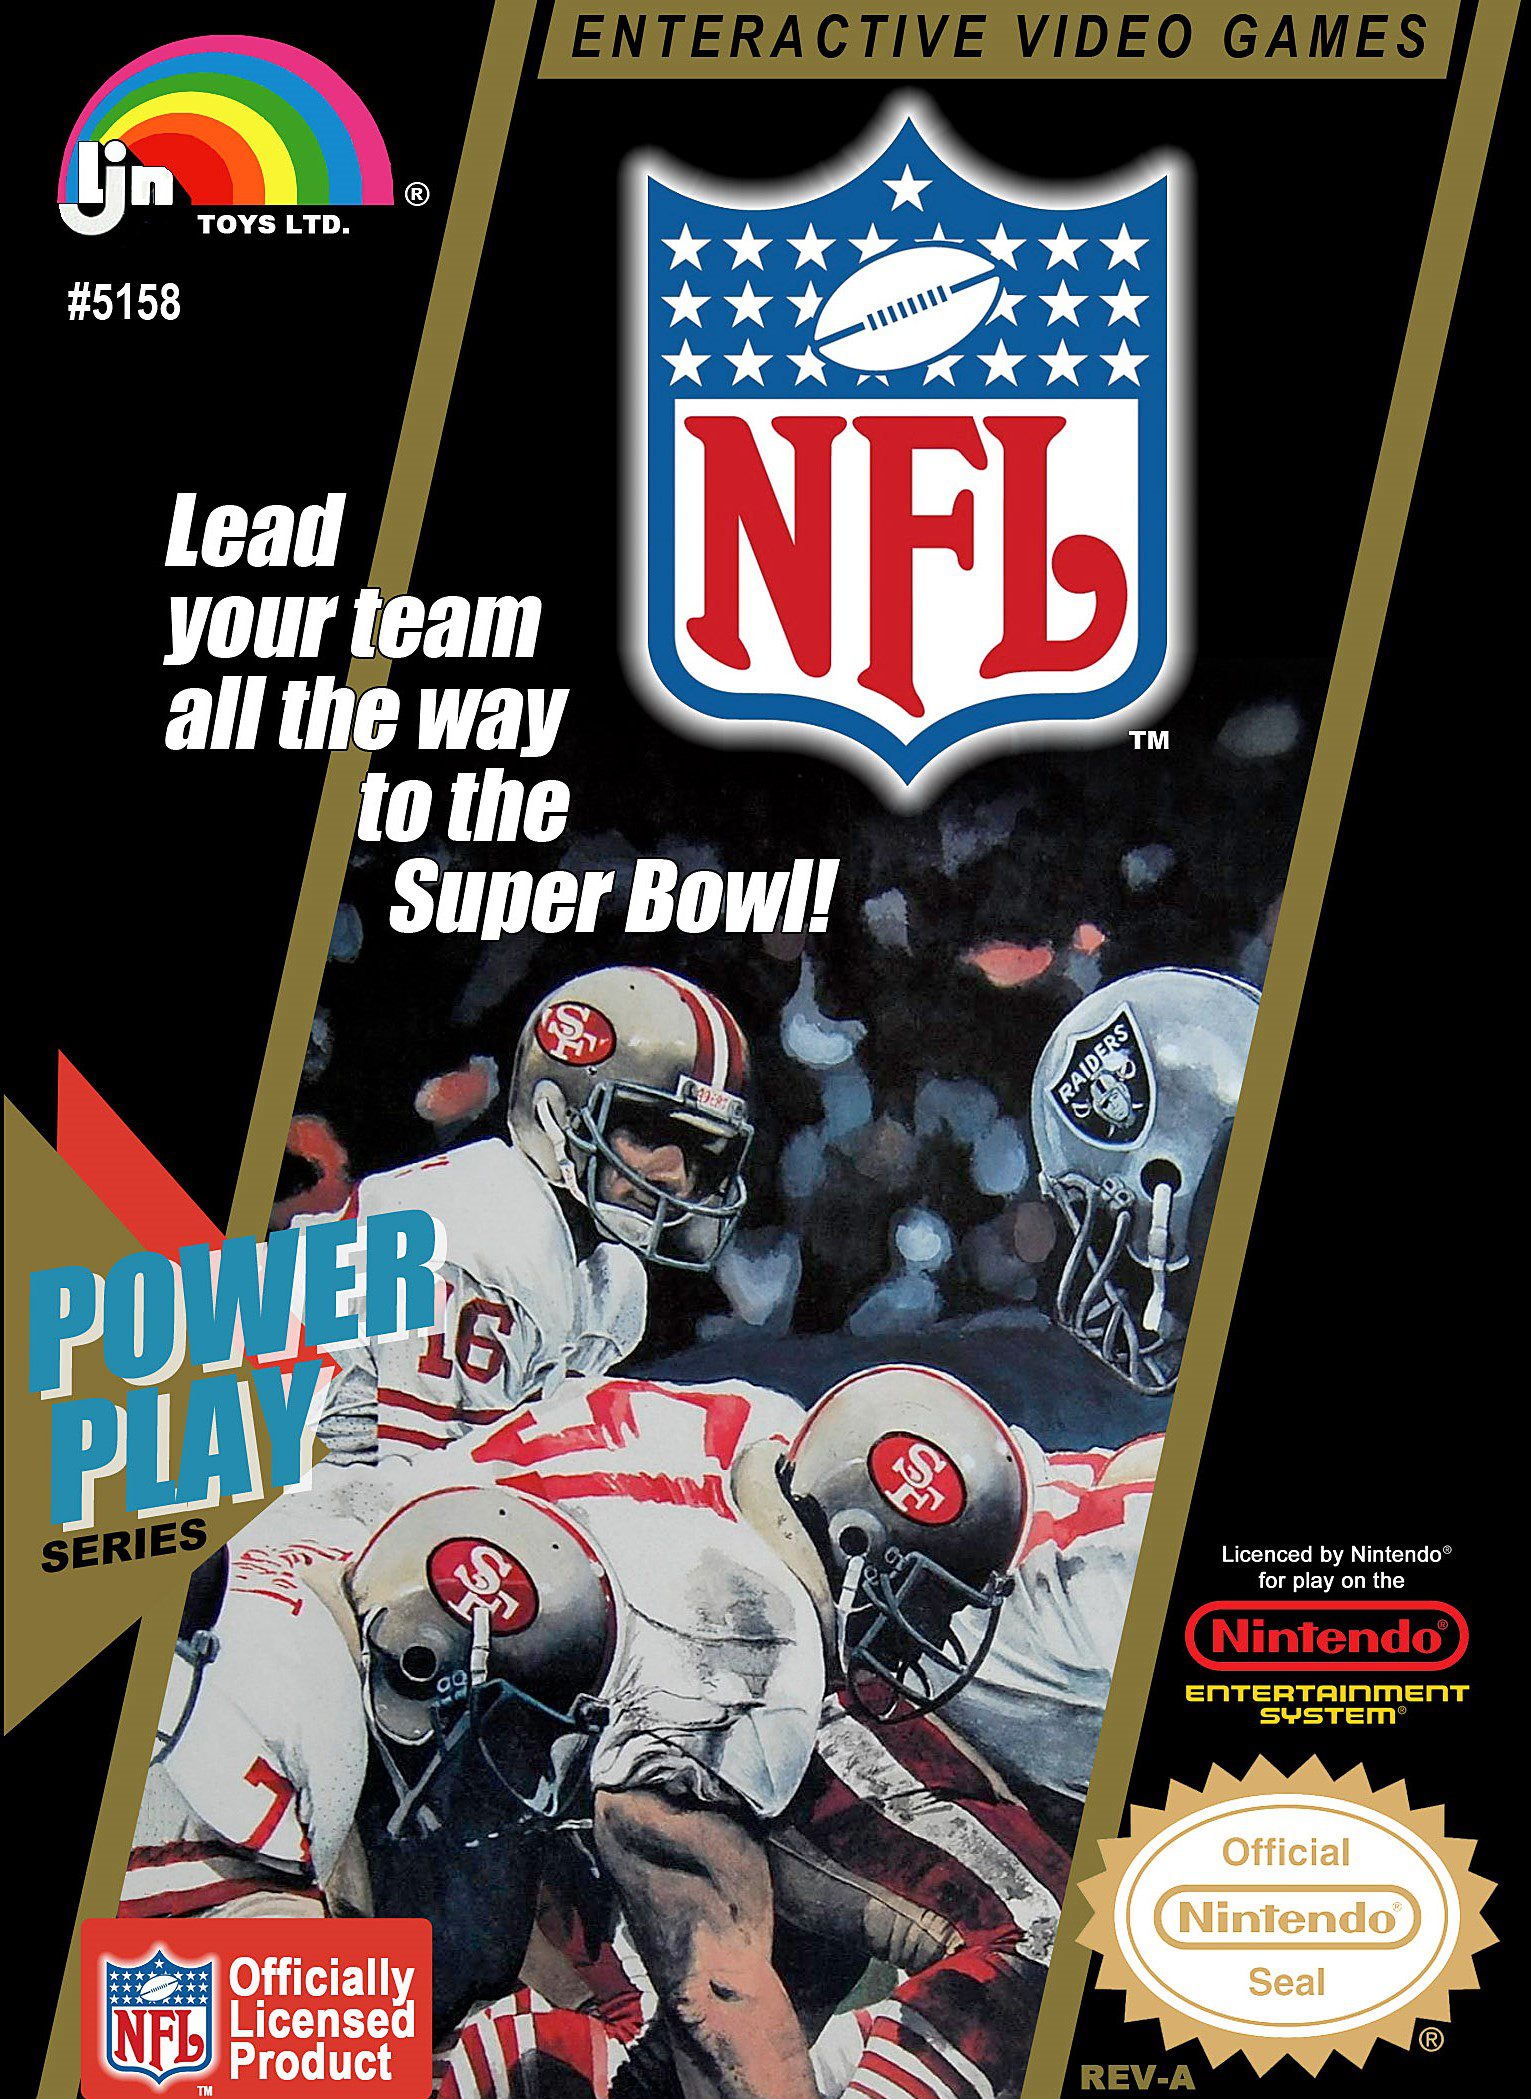 NFL Football for Nintendo Entertainment System (NES)